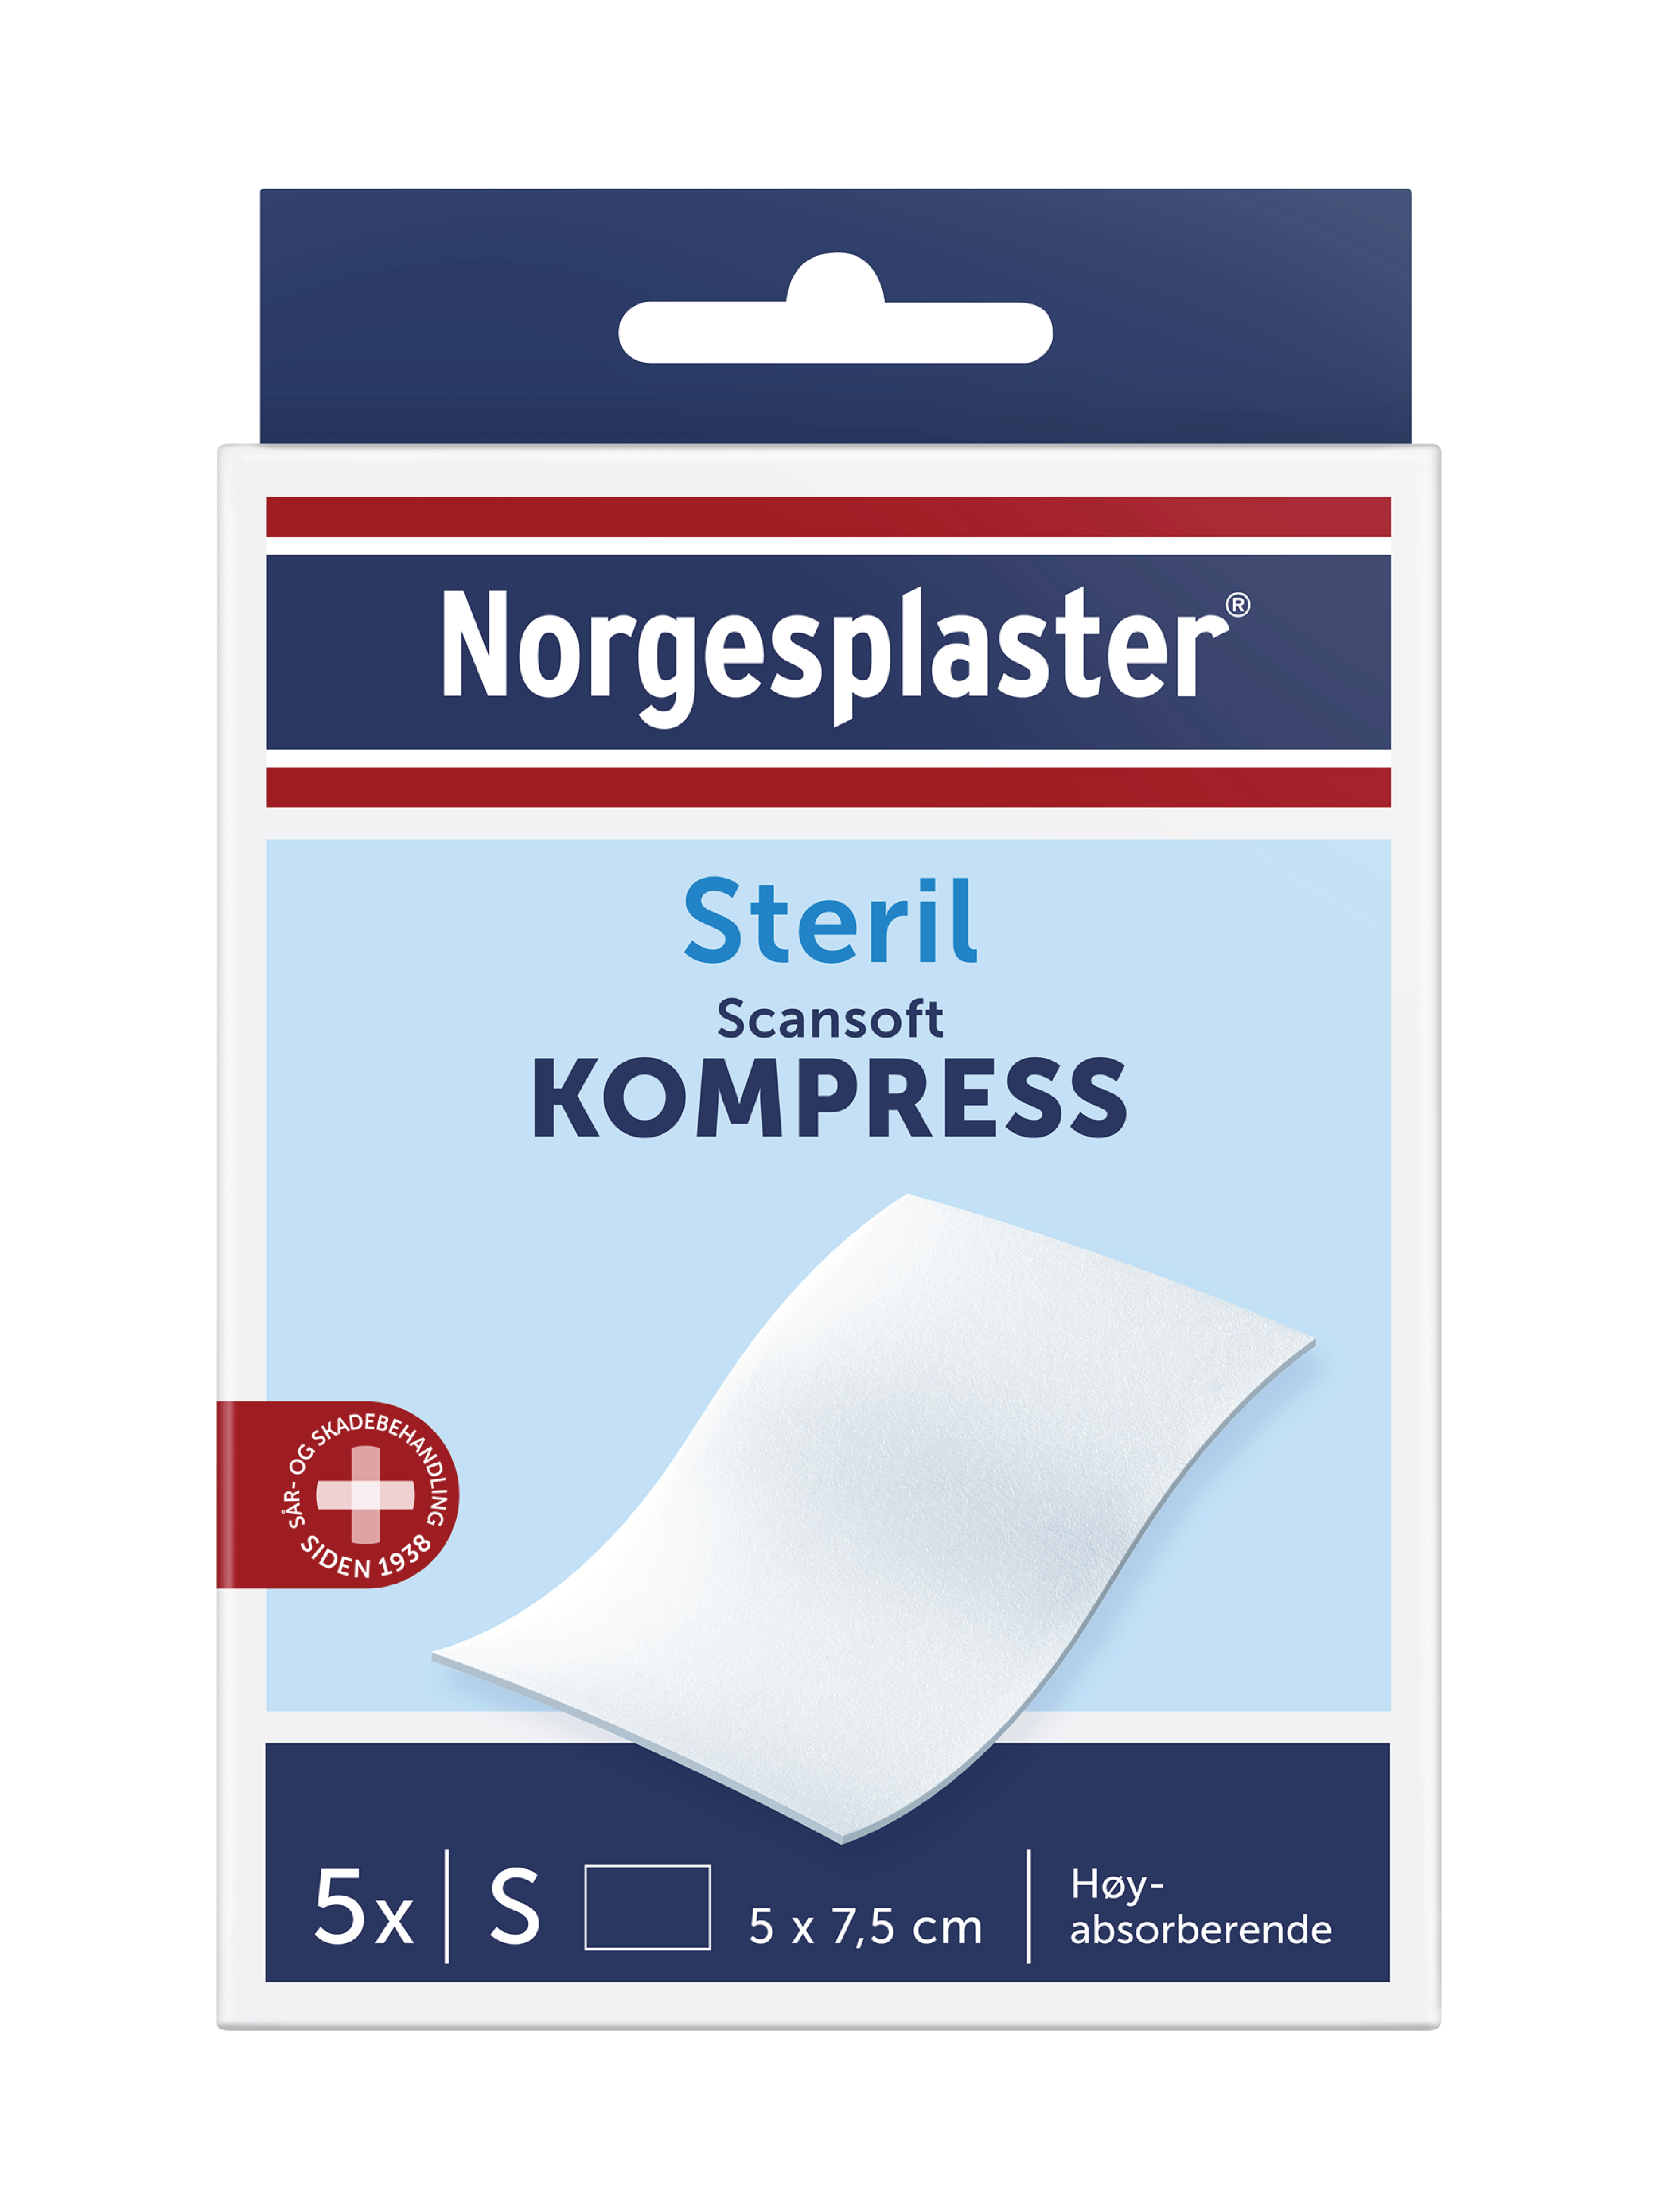 Norgesplaster Scansoft kompress, 5x7,5 cm, 5 stk.